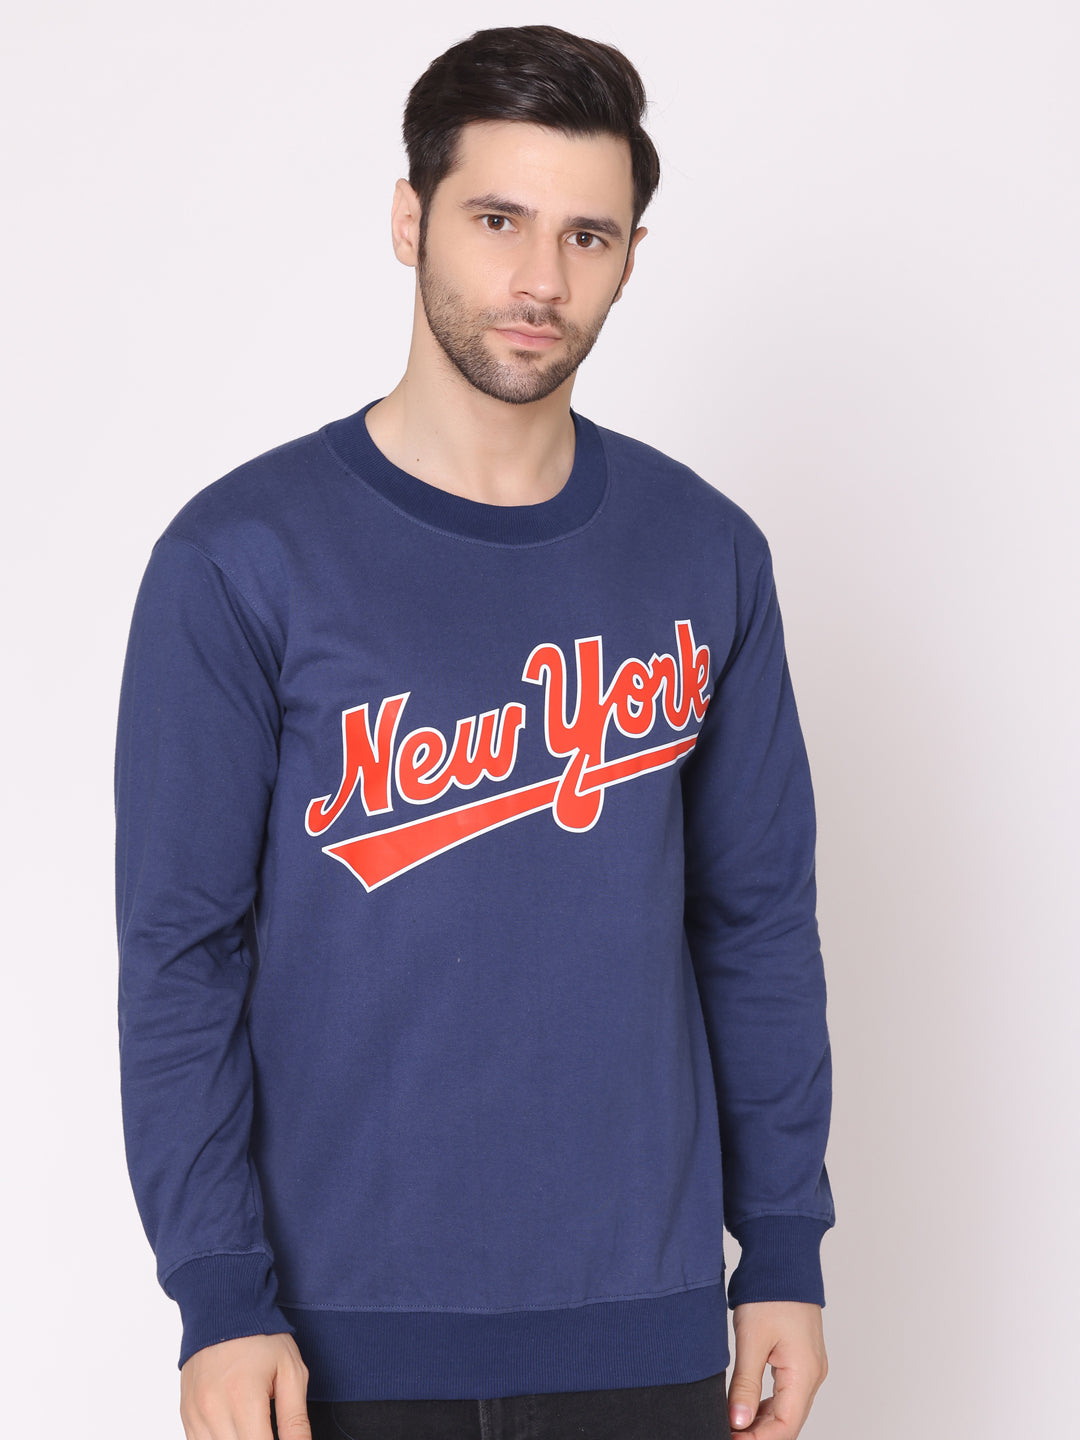 Men's New York Navy Printed Sweatshirt